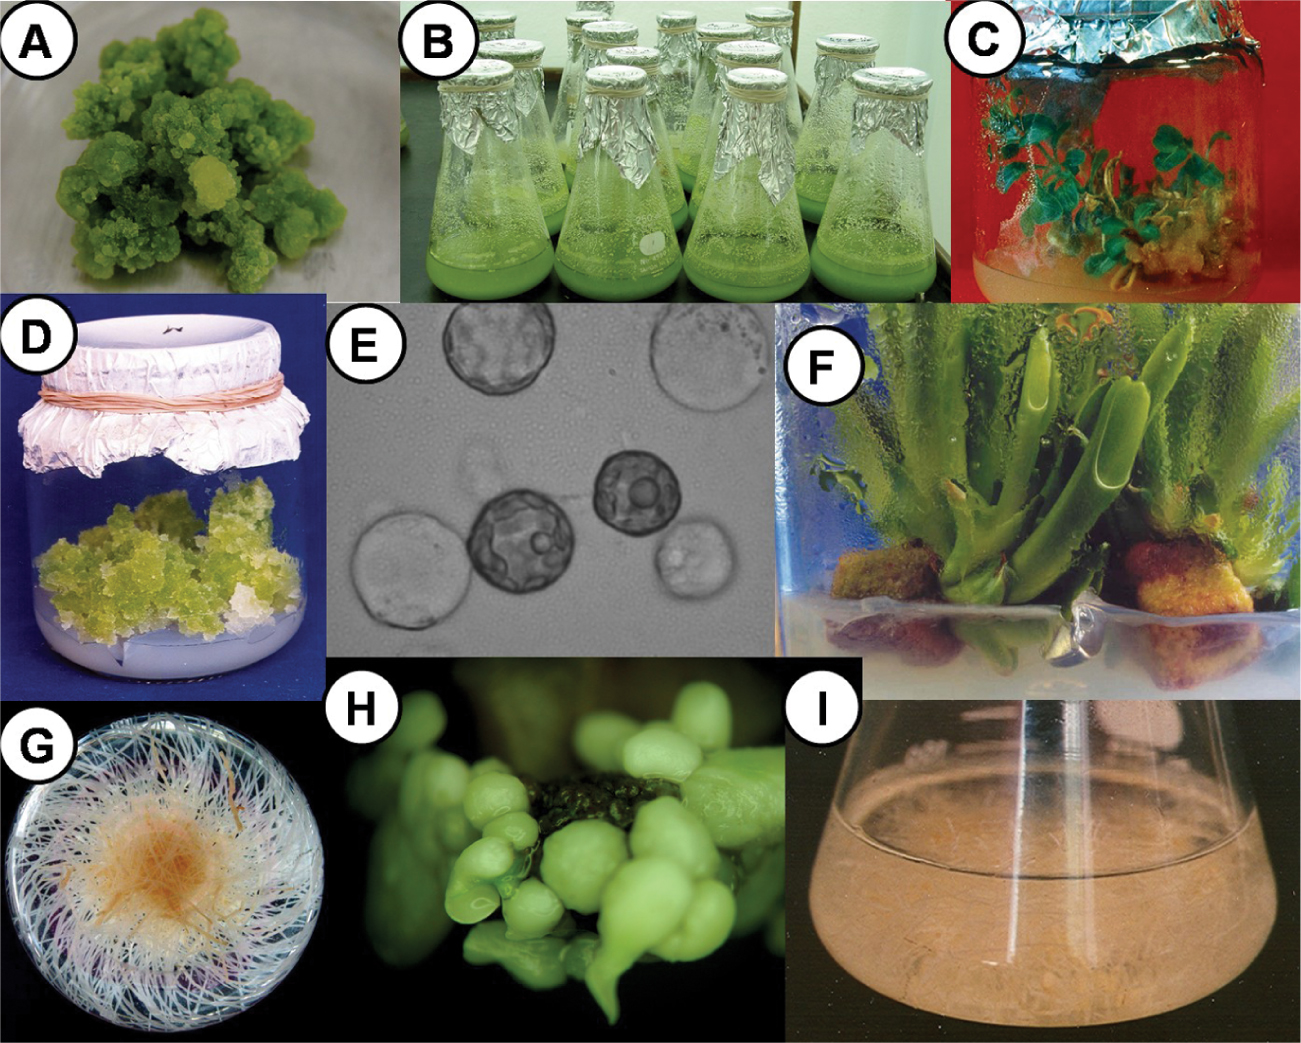 Plant culture. In vitro растения. Культивирование растений in vitro. In vitro растения Каллус. Клетки in vitro.